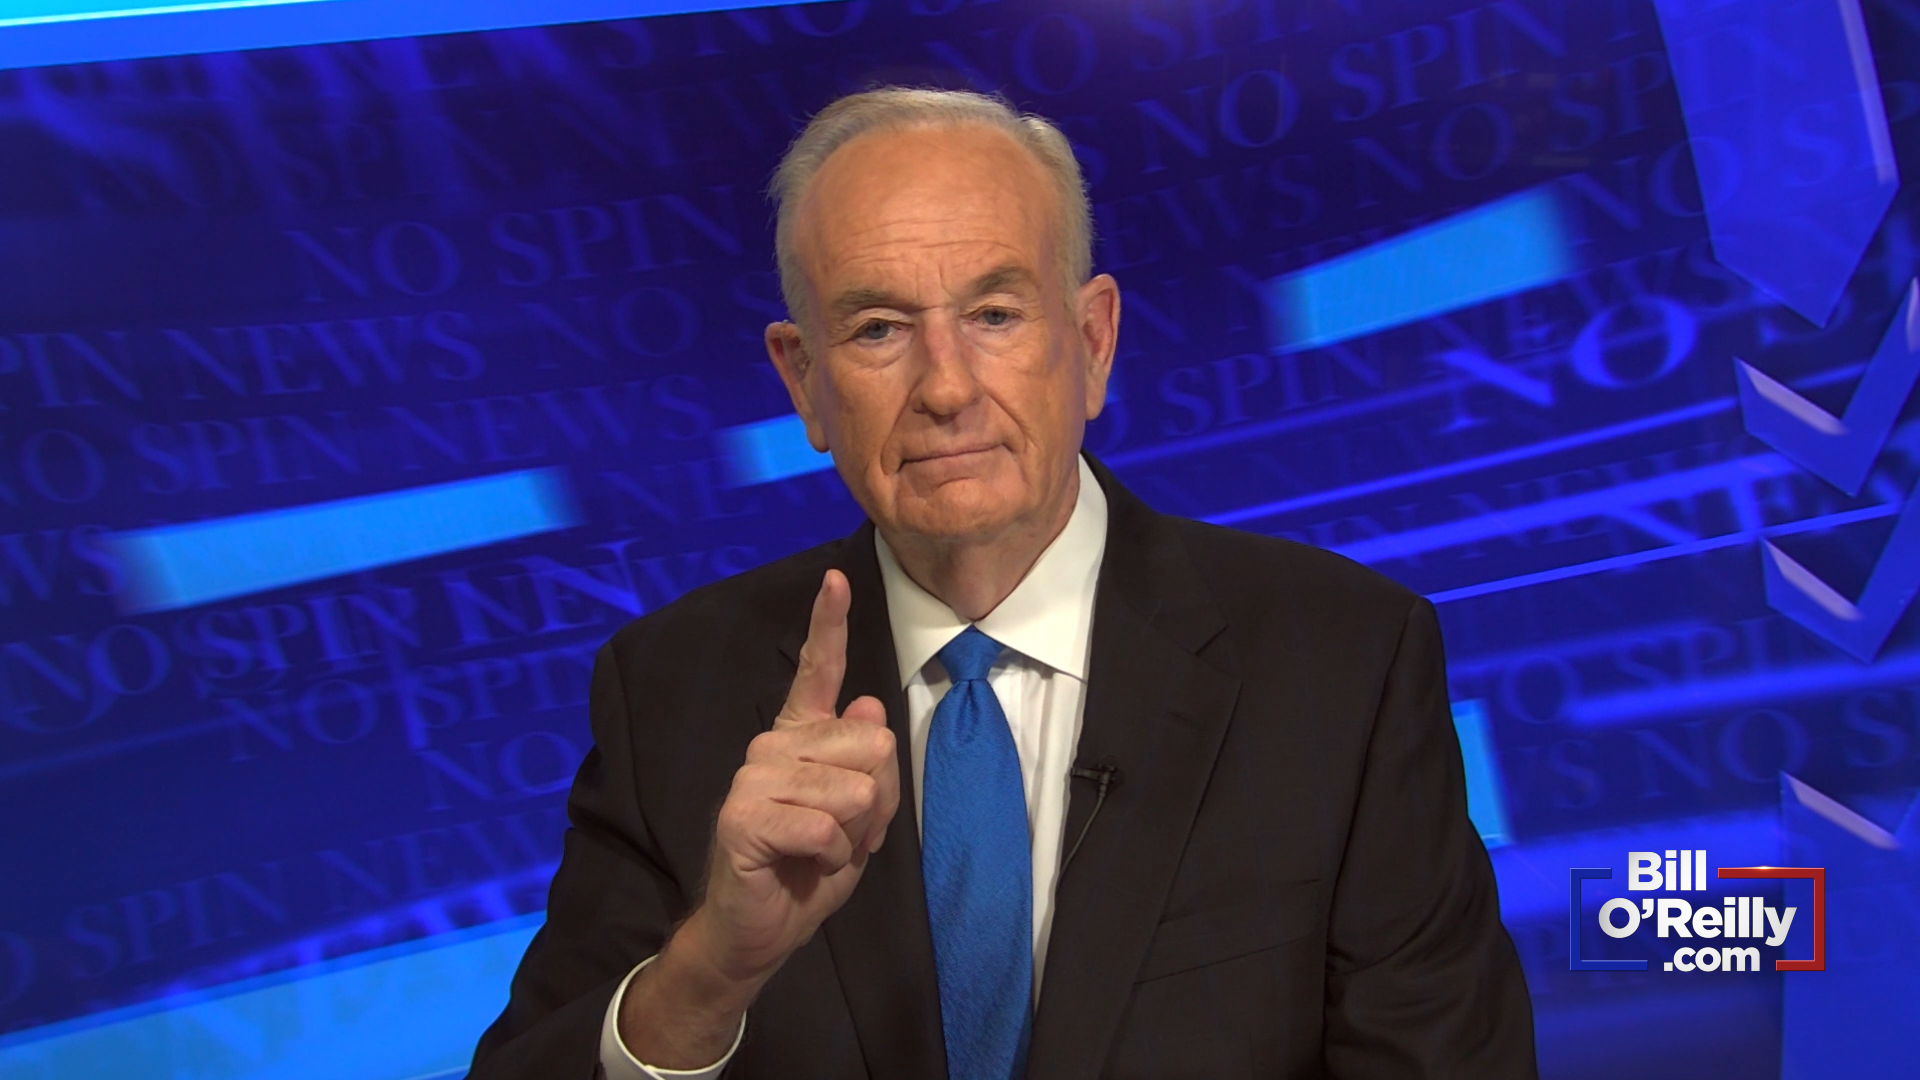 O'Reilly: Biden is a Certified Disaster